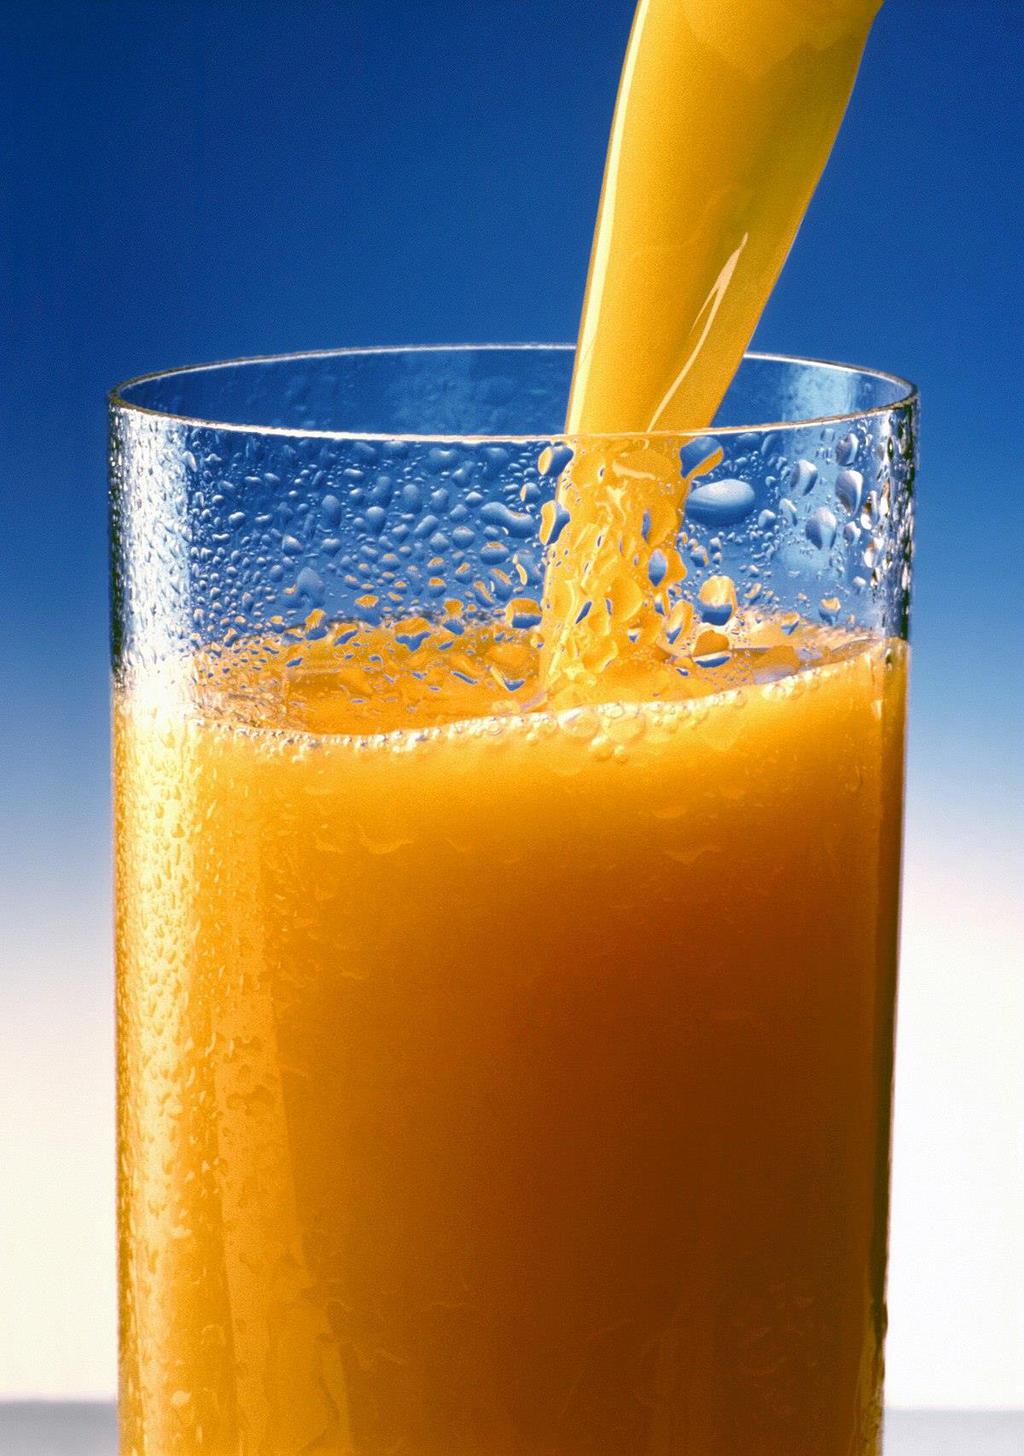 Juice - Wikipedia